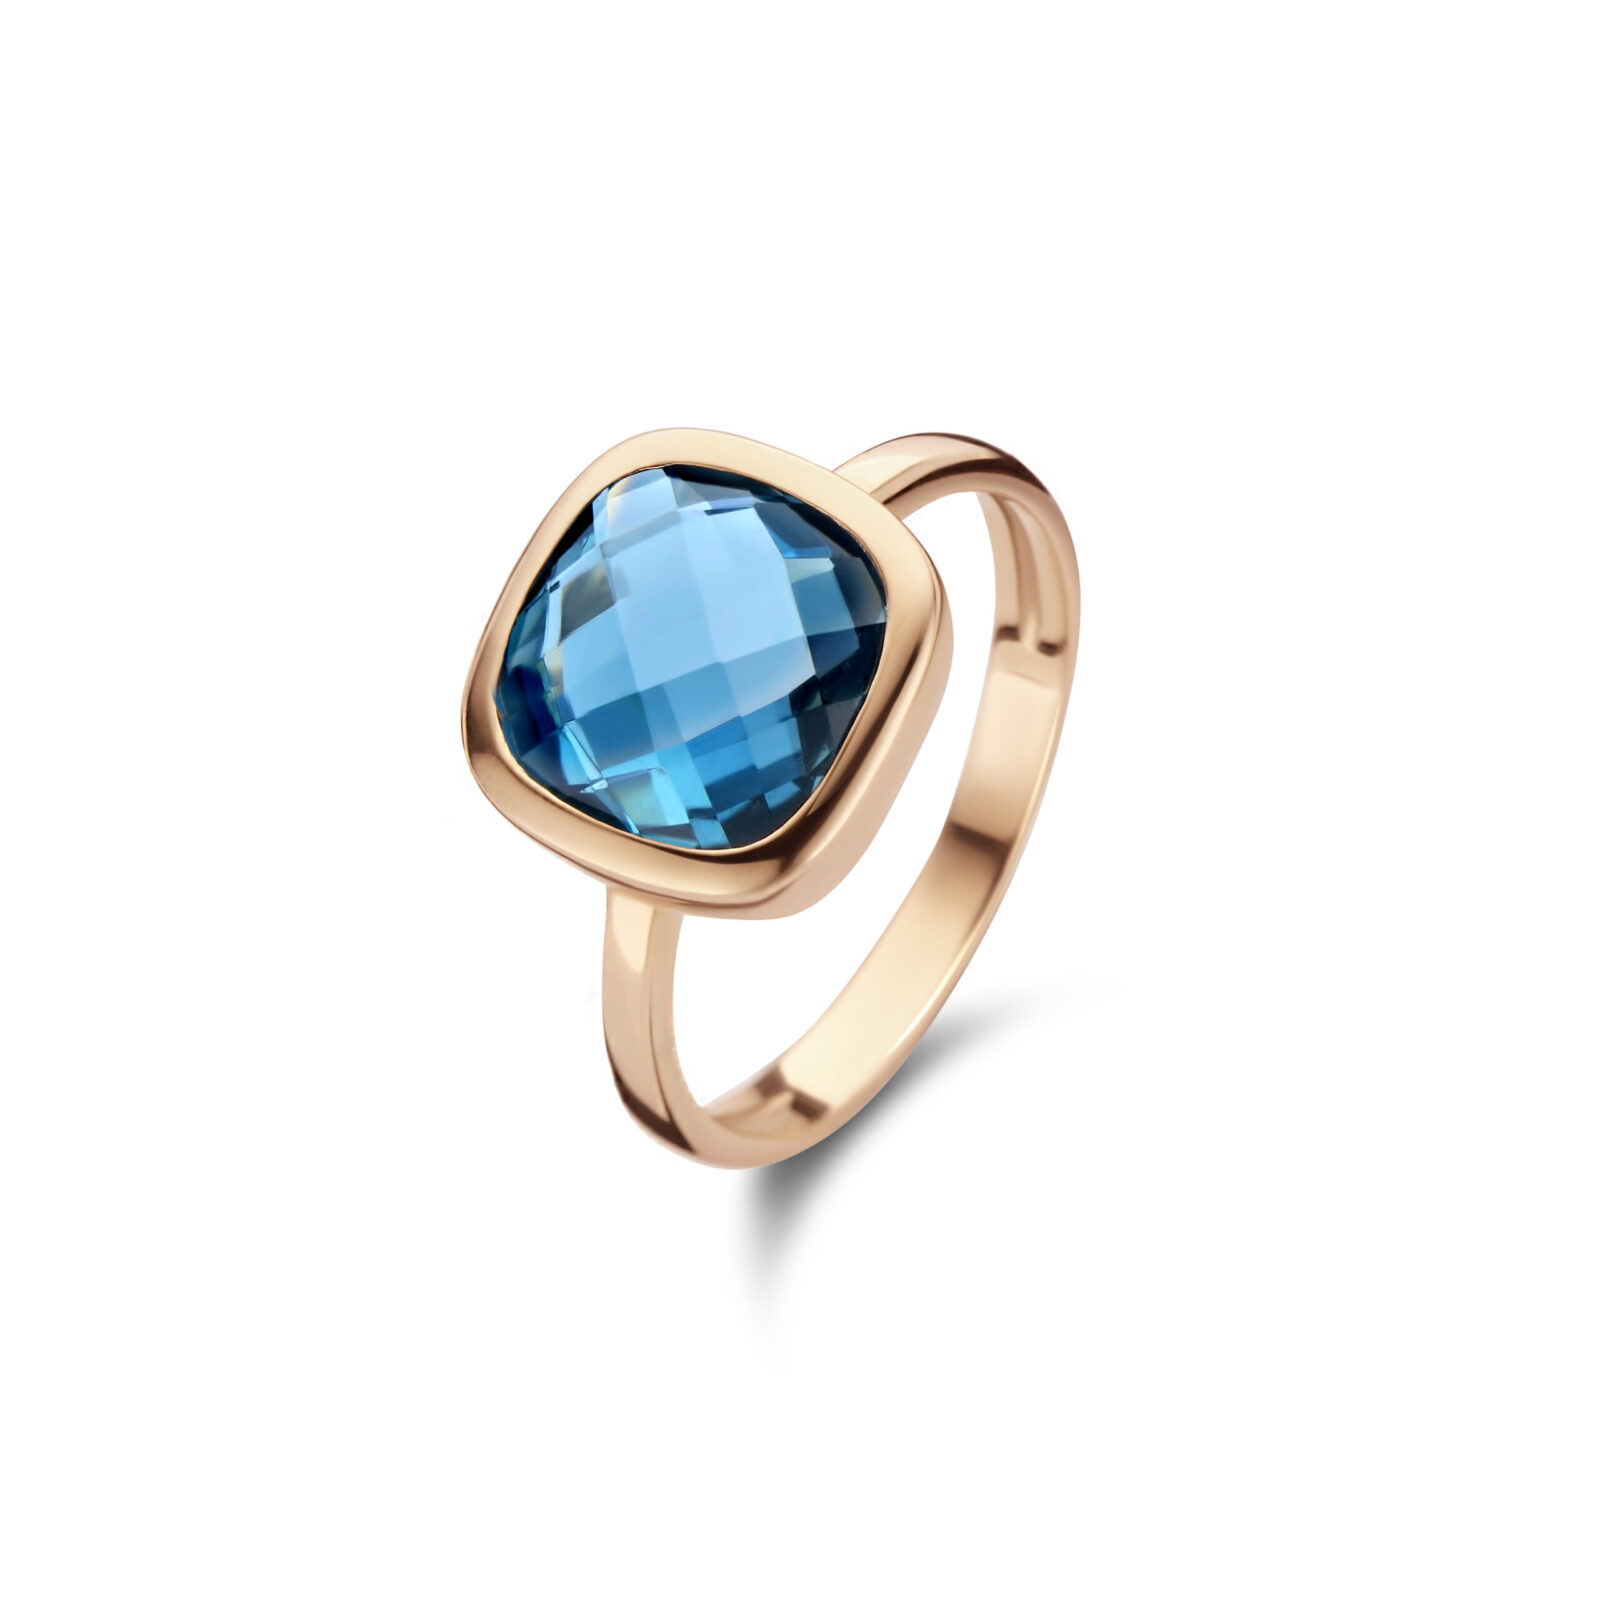 Ervaren persoon verslag doen van Hoe dan ook Jarrèl Beau Monde San Marino ring grande met blauwe steen 4R.7439.TLS - Ha  Juweliers